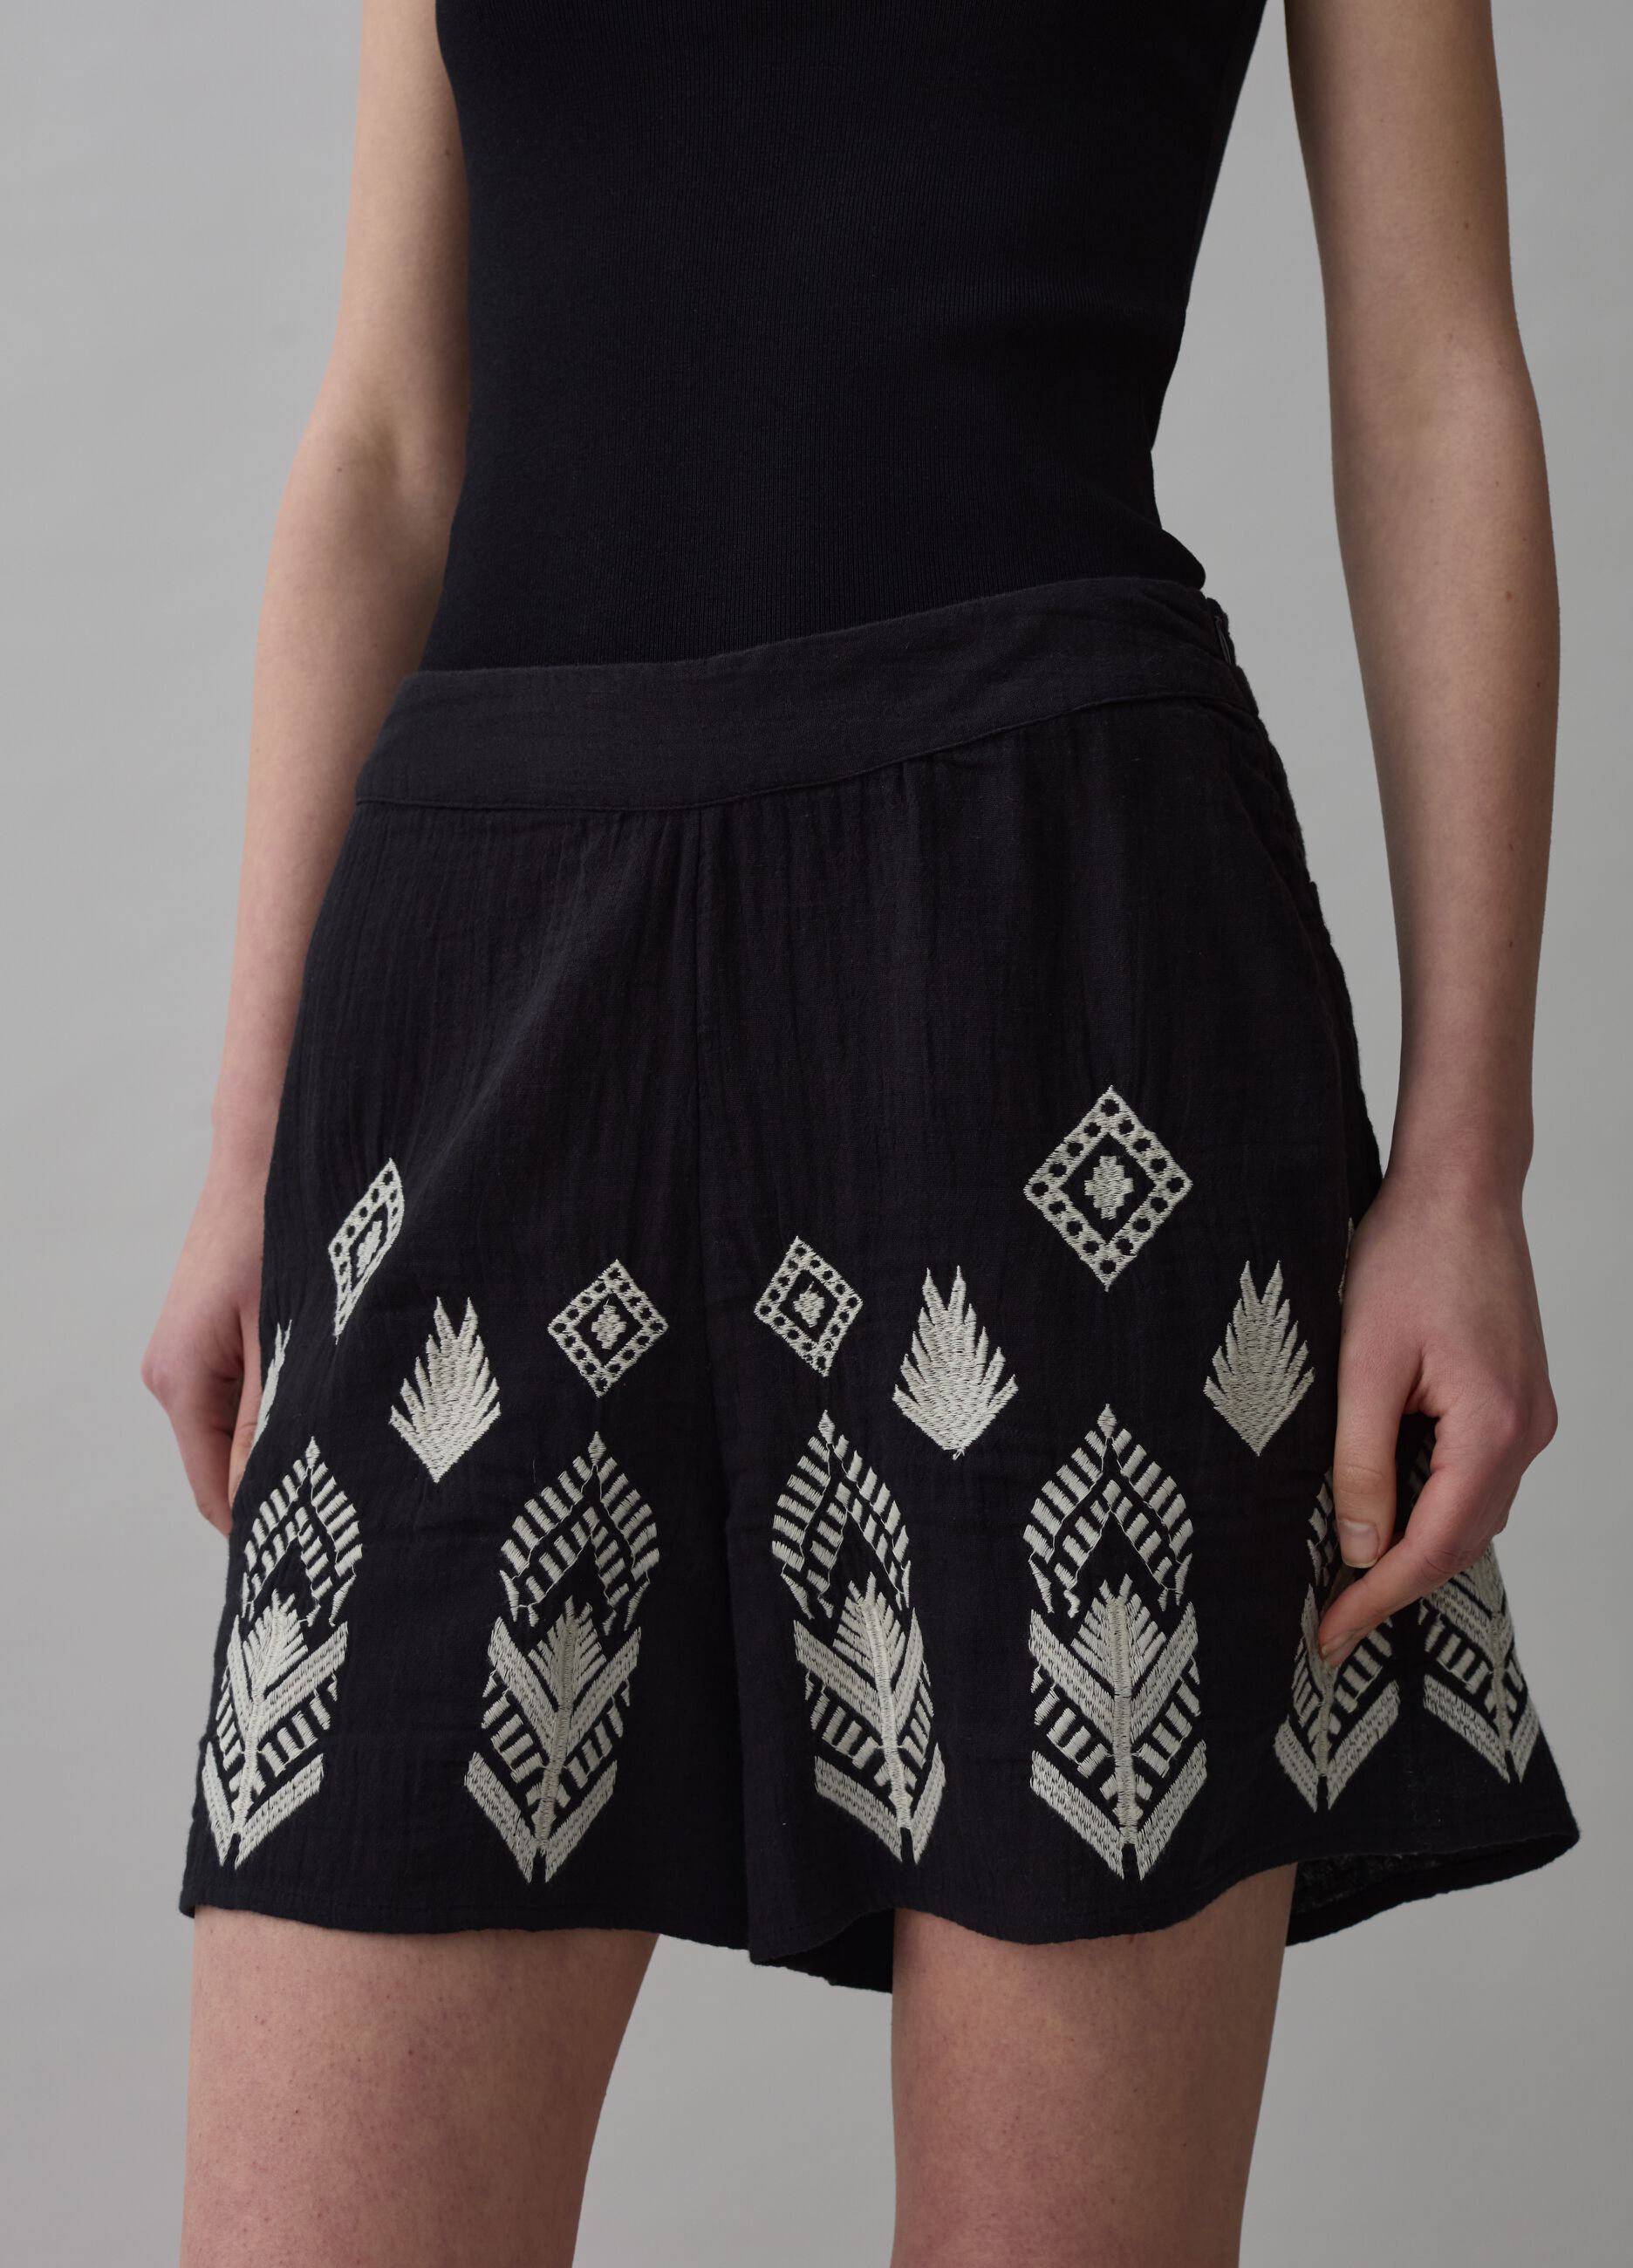 Gauze shorts with ethnic embroidery